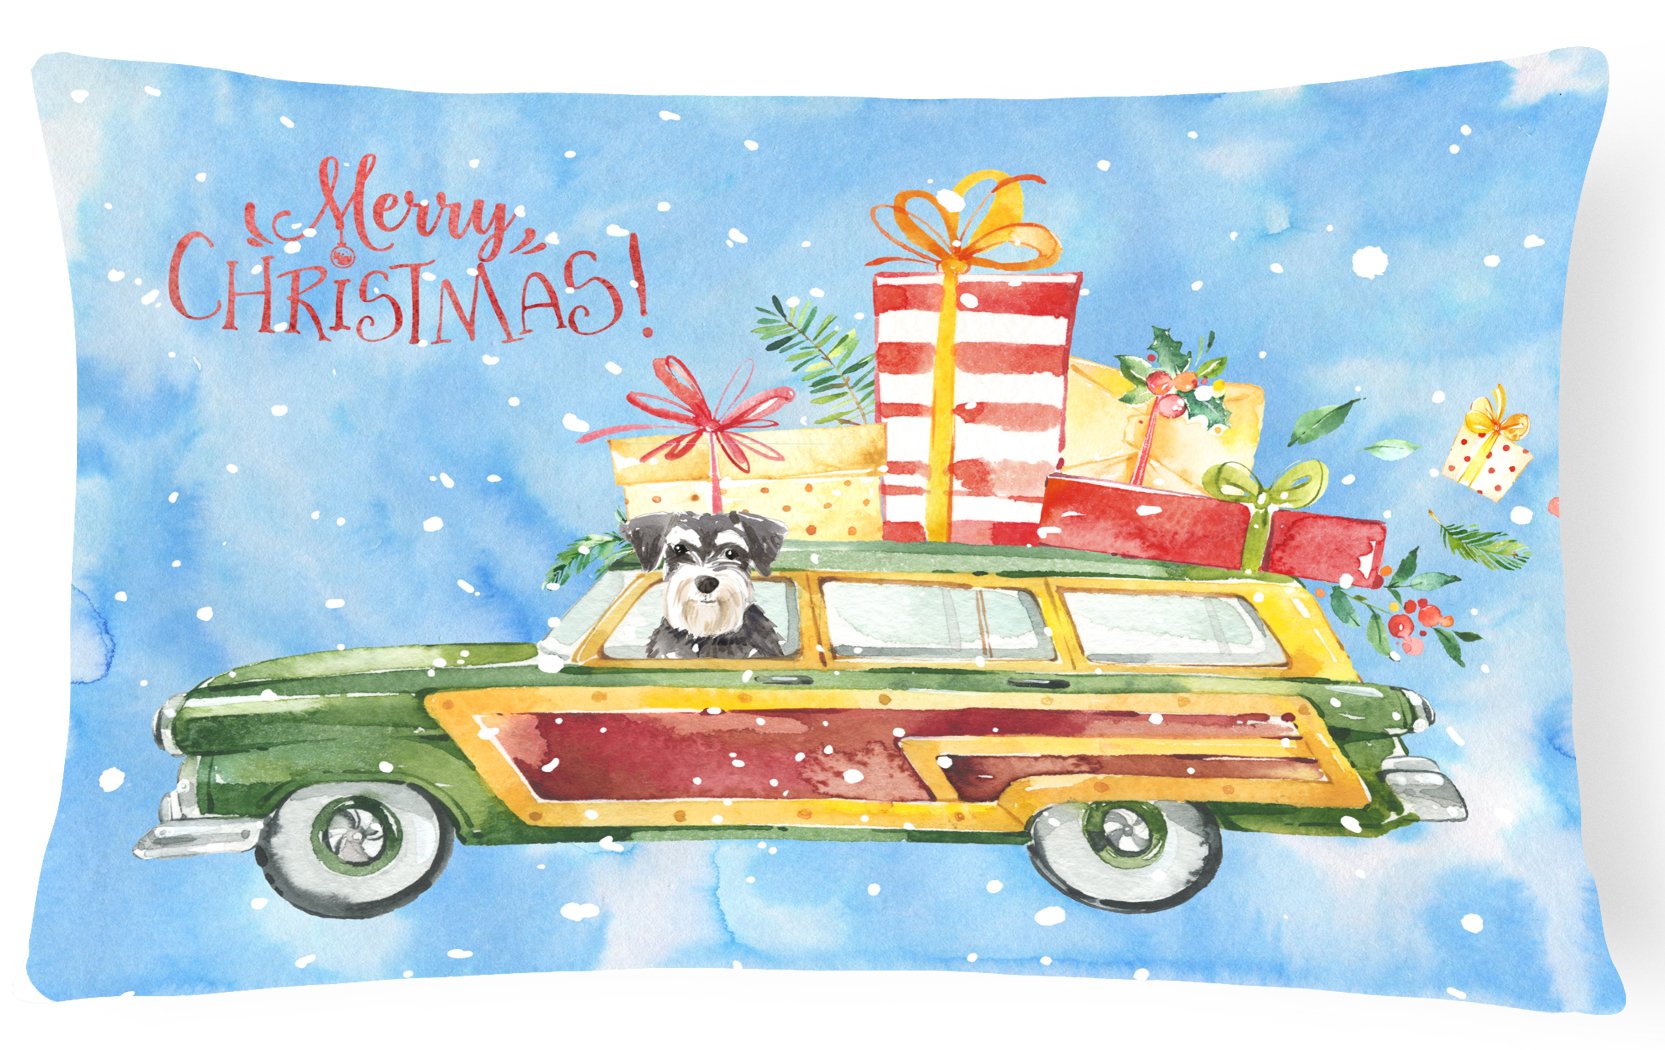 Merry Christmas Schnauzer Canvas Fabric Decorative Pillow CK2415PW1216 by Caroline's Treasures